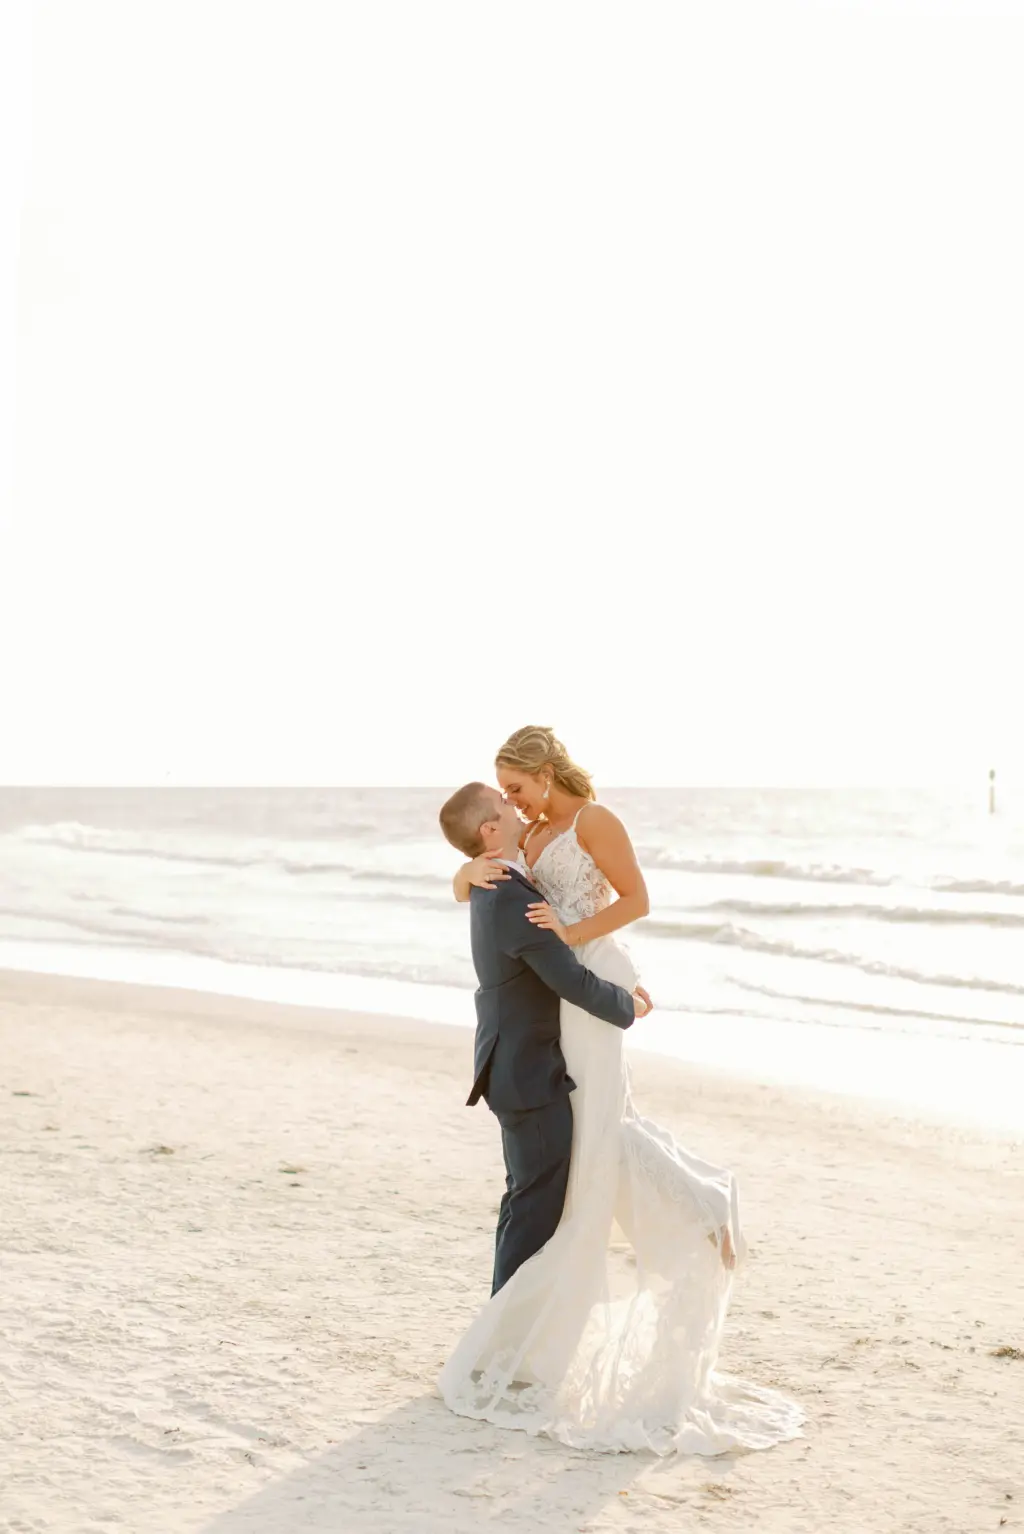 Bride and Groom Beach Wedding Portrait Inspiration | Venue Wyndham Grand Clearwater Beach